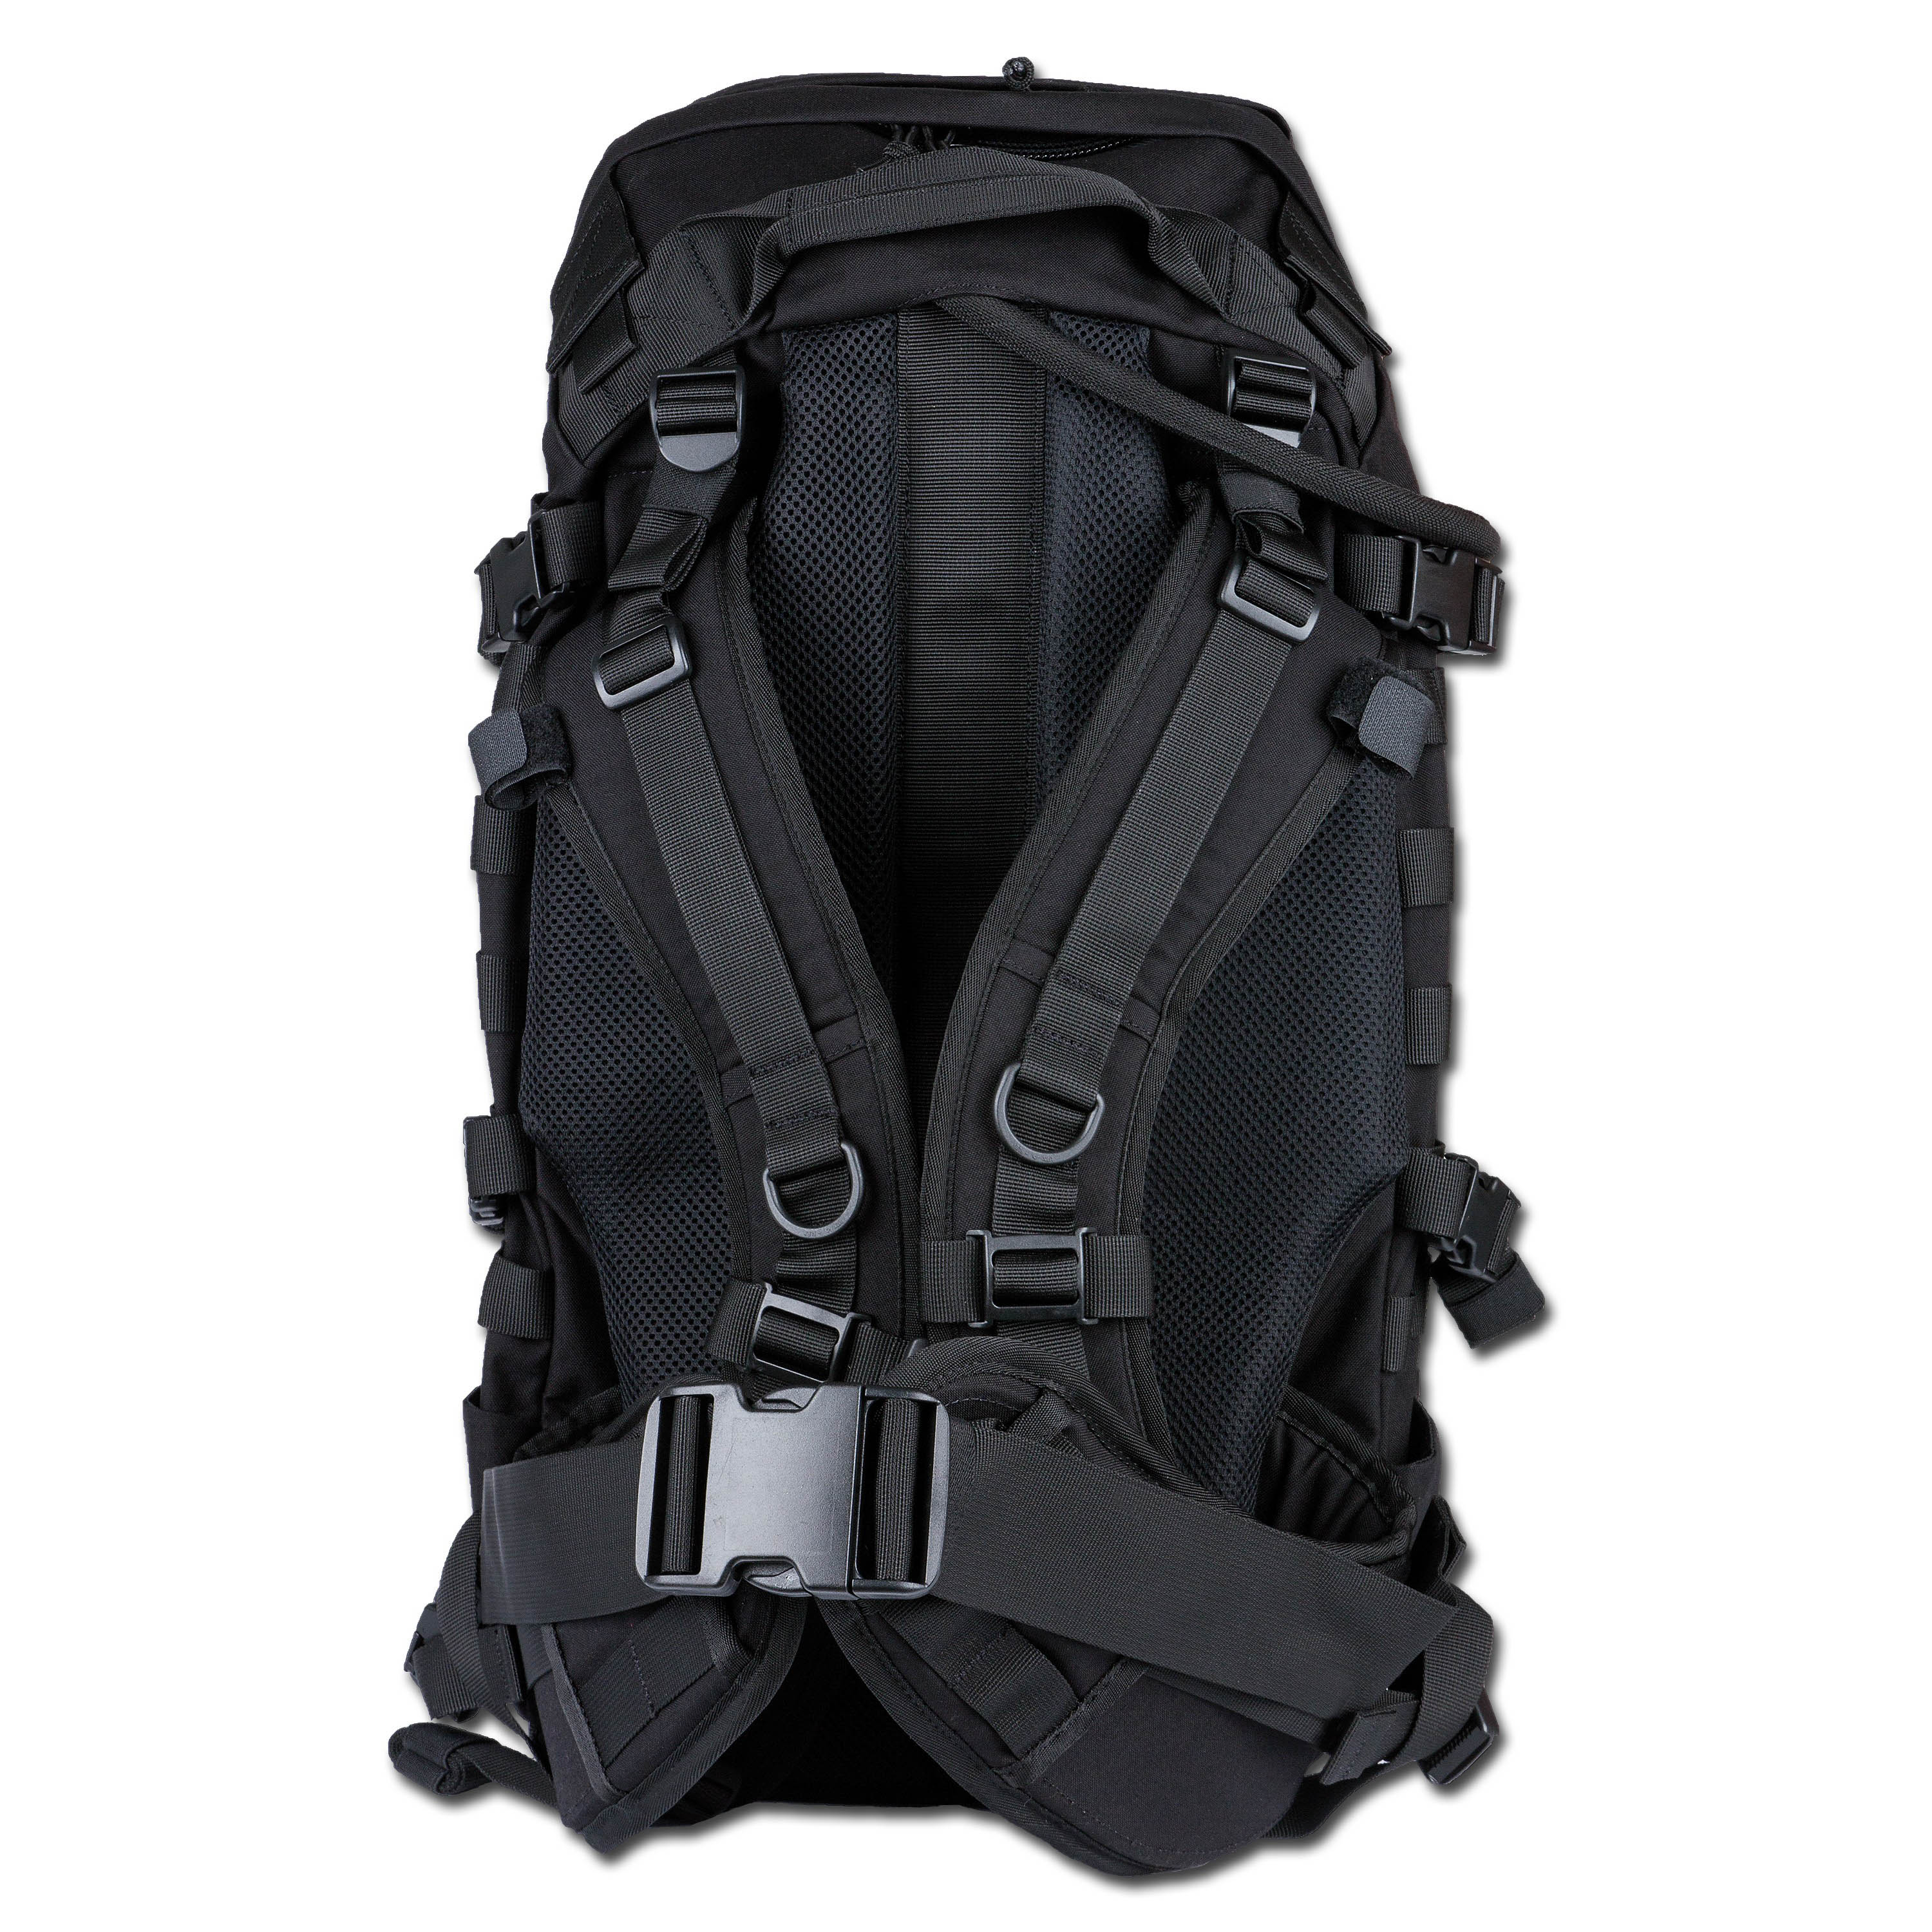 Backpack Source Double D 45L black | Backpack Source Double D 45L black ...